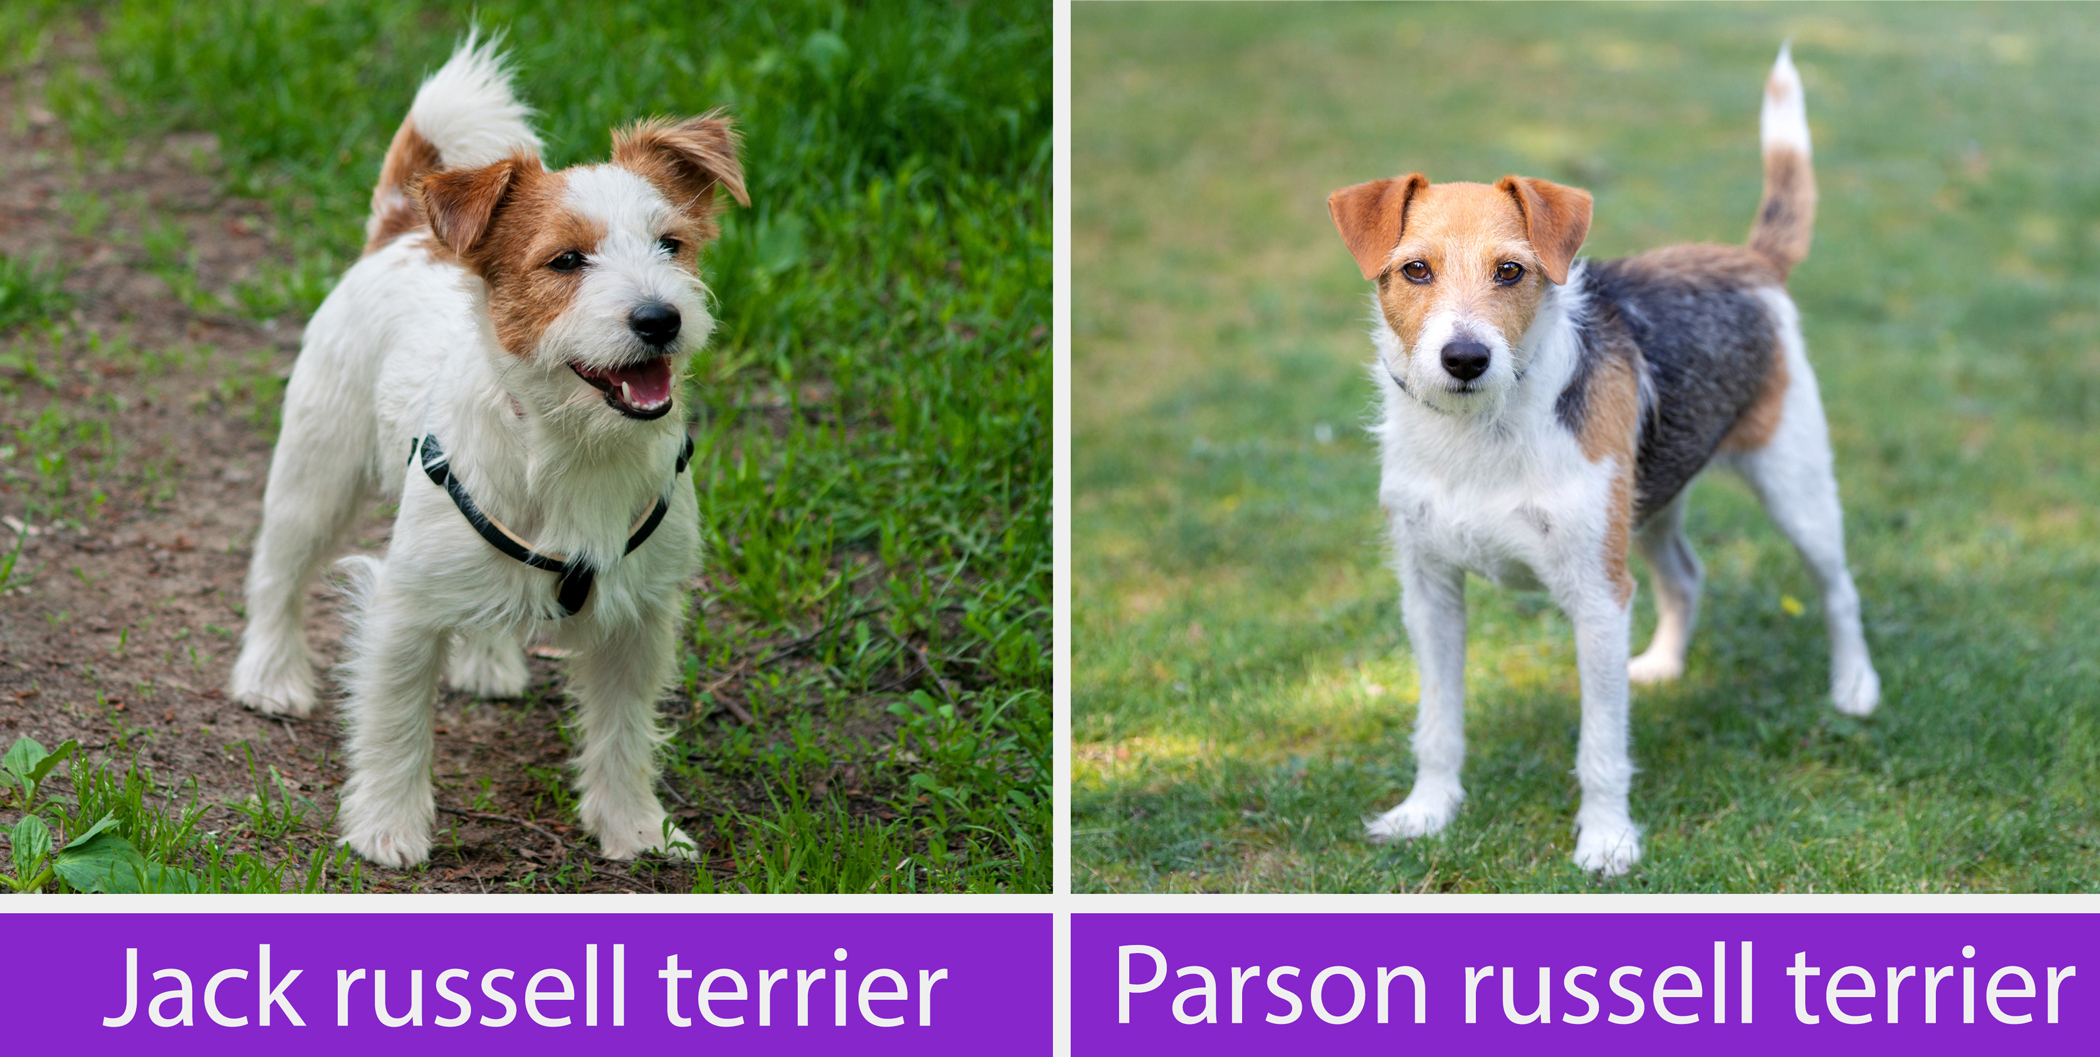 Jack russell terrier vs Parson russell terrier